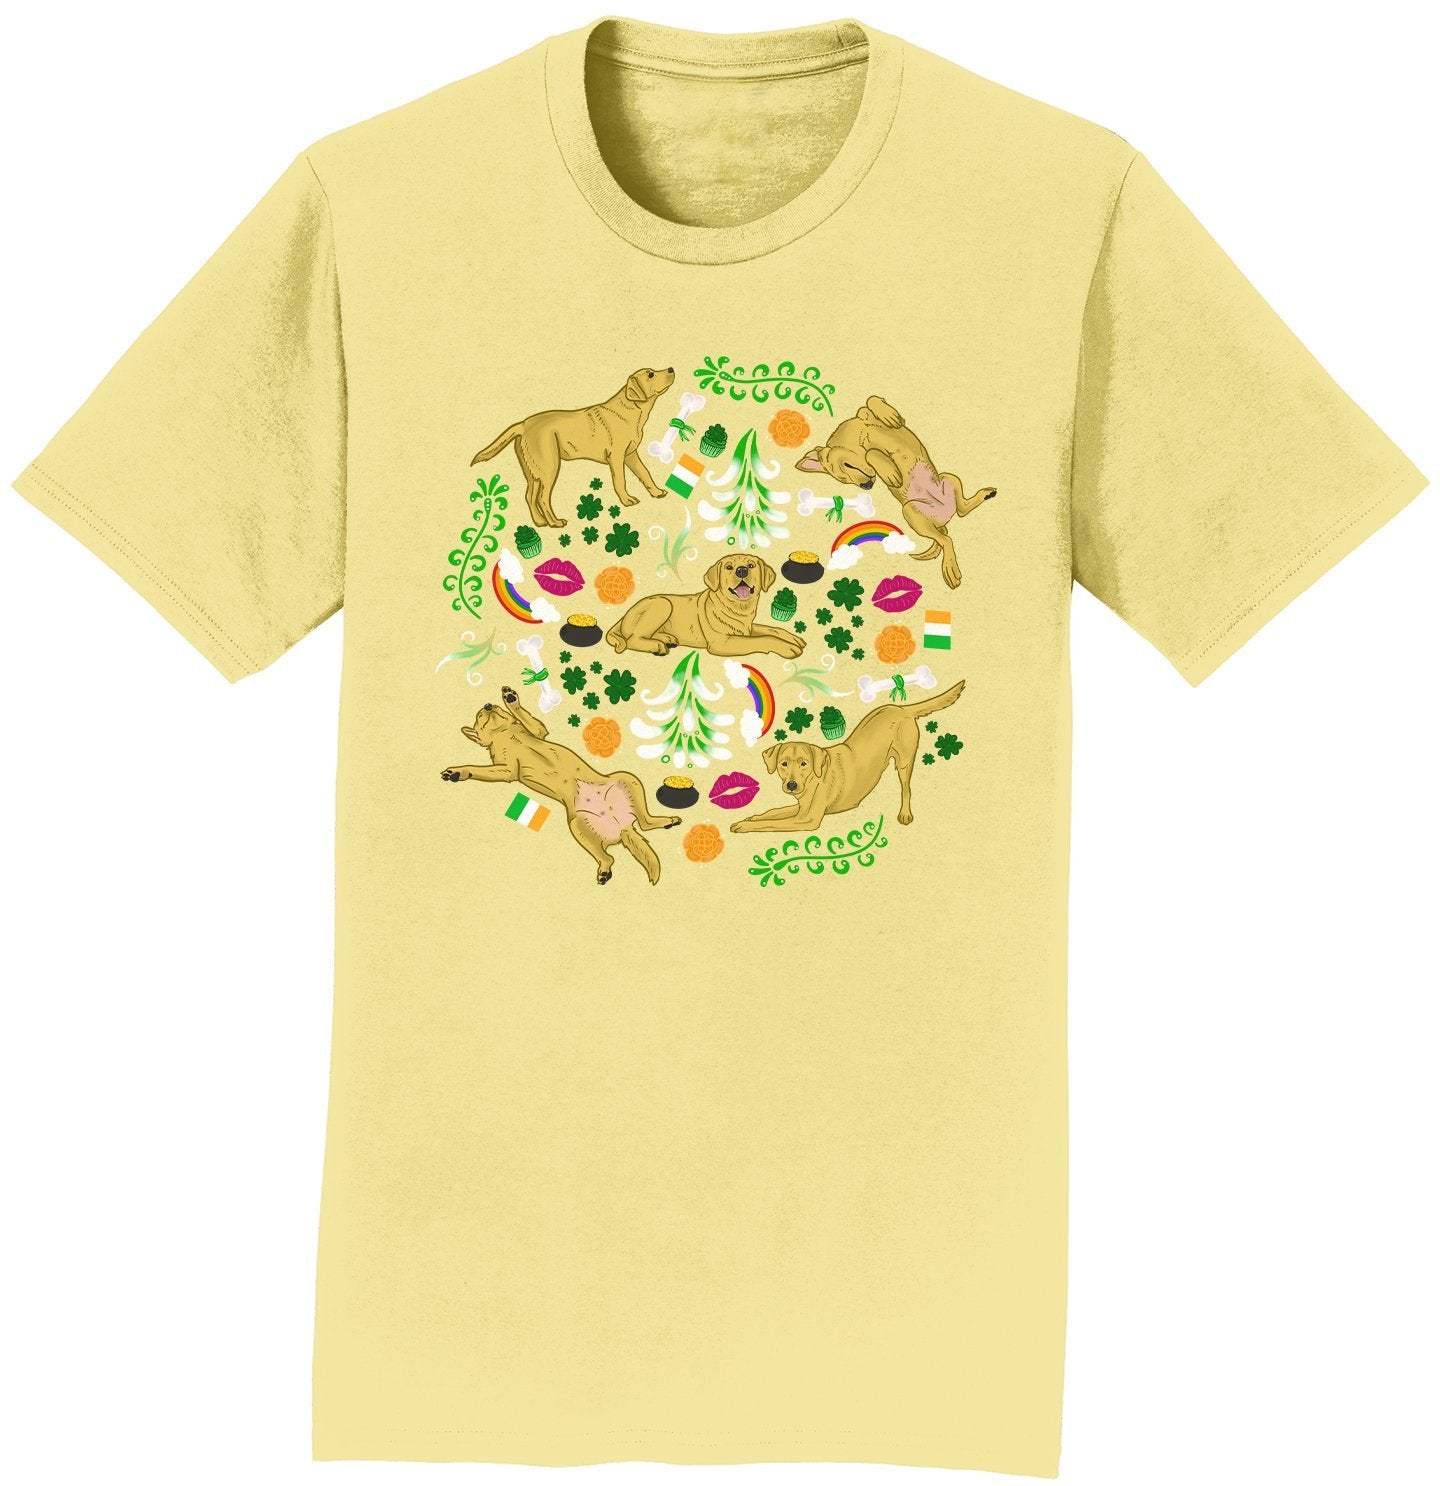 Yellow Labrador Green Fleur Design - Adult Unisex T-Shirt